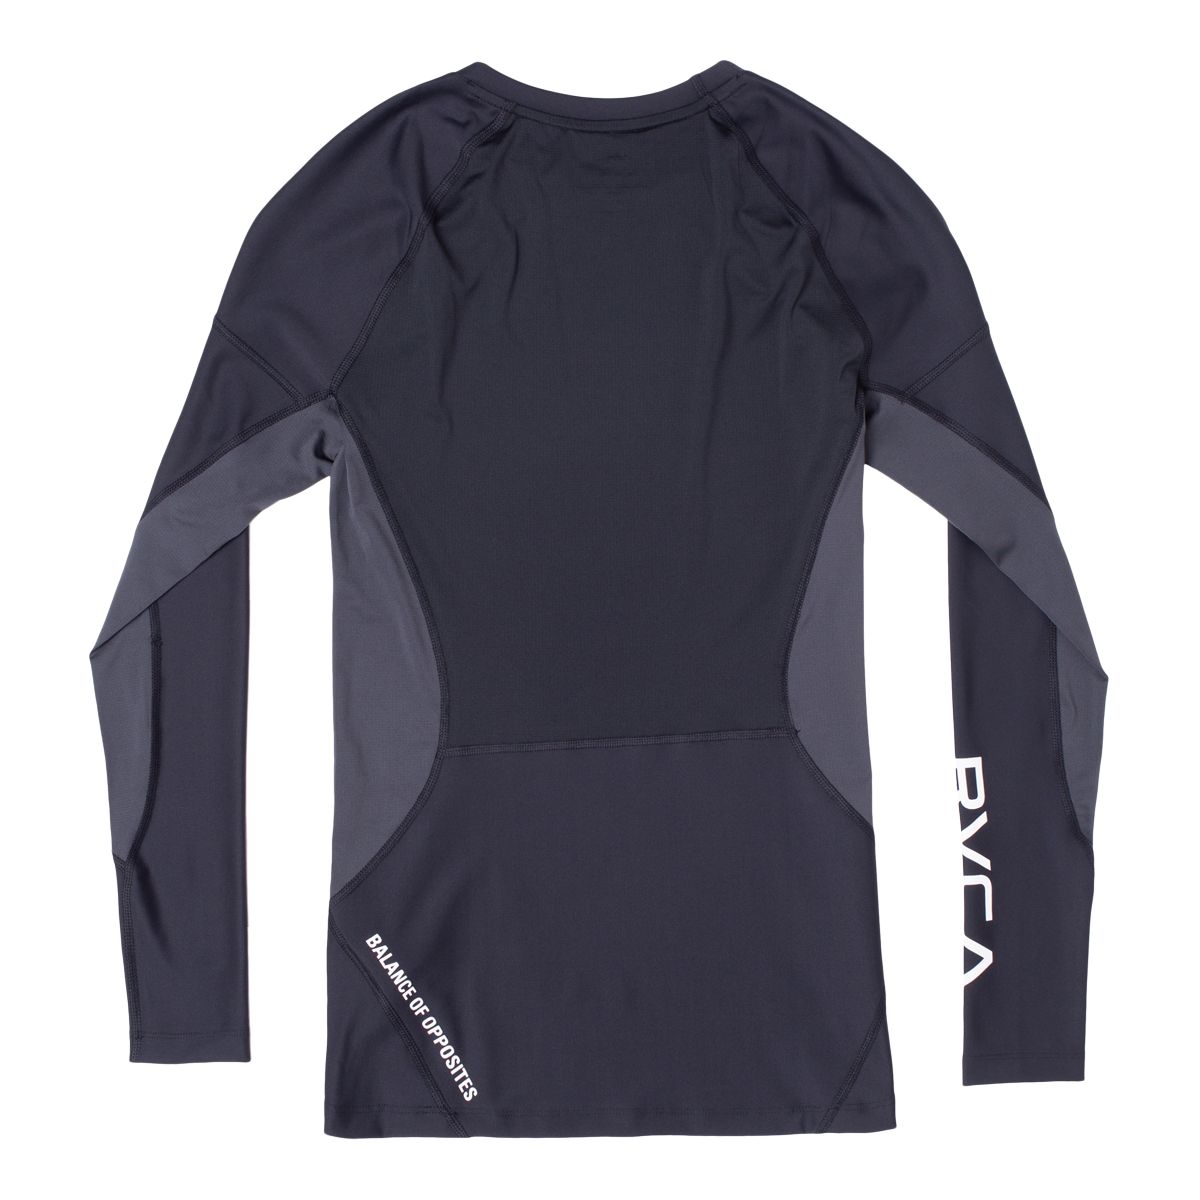 Rashguard va sport- long-sleeved compression t-shirt for women